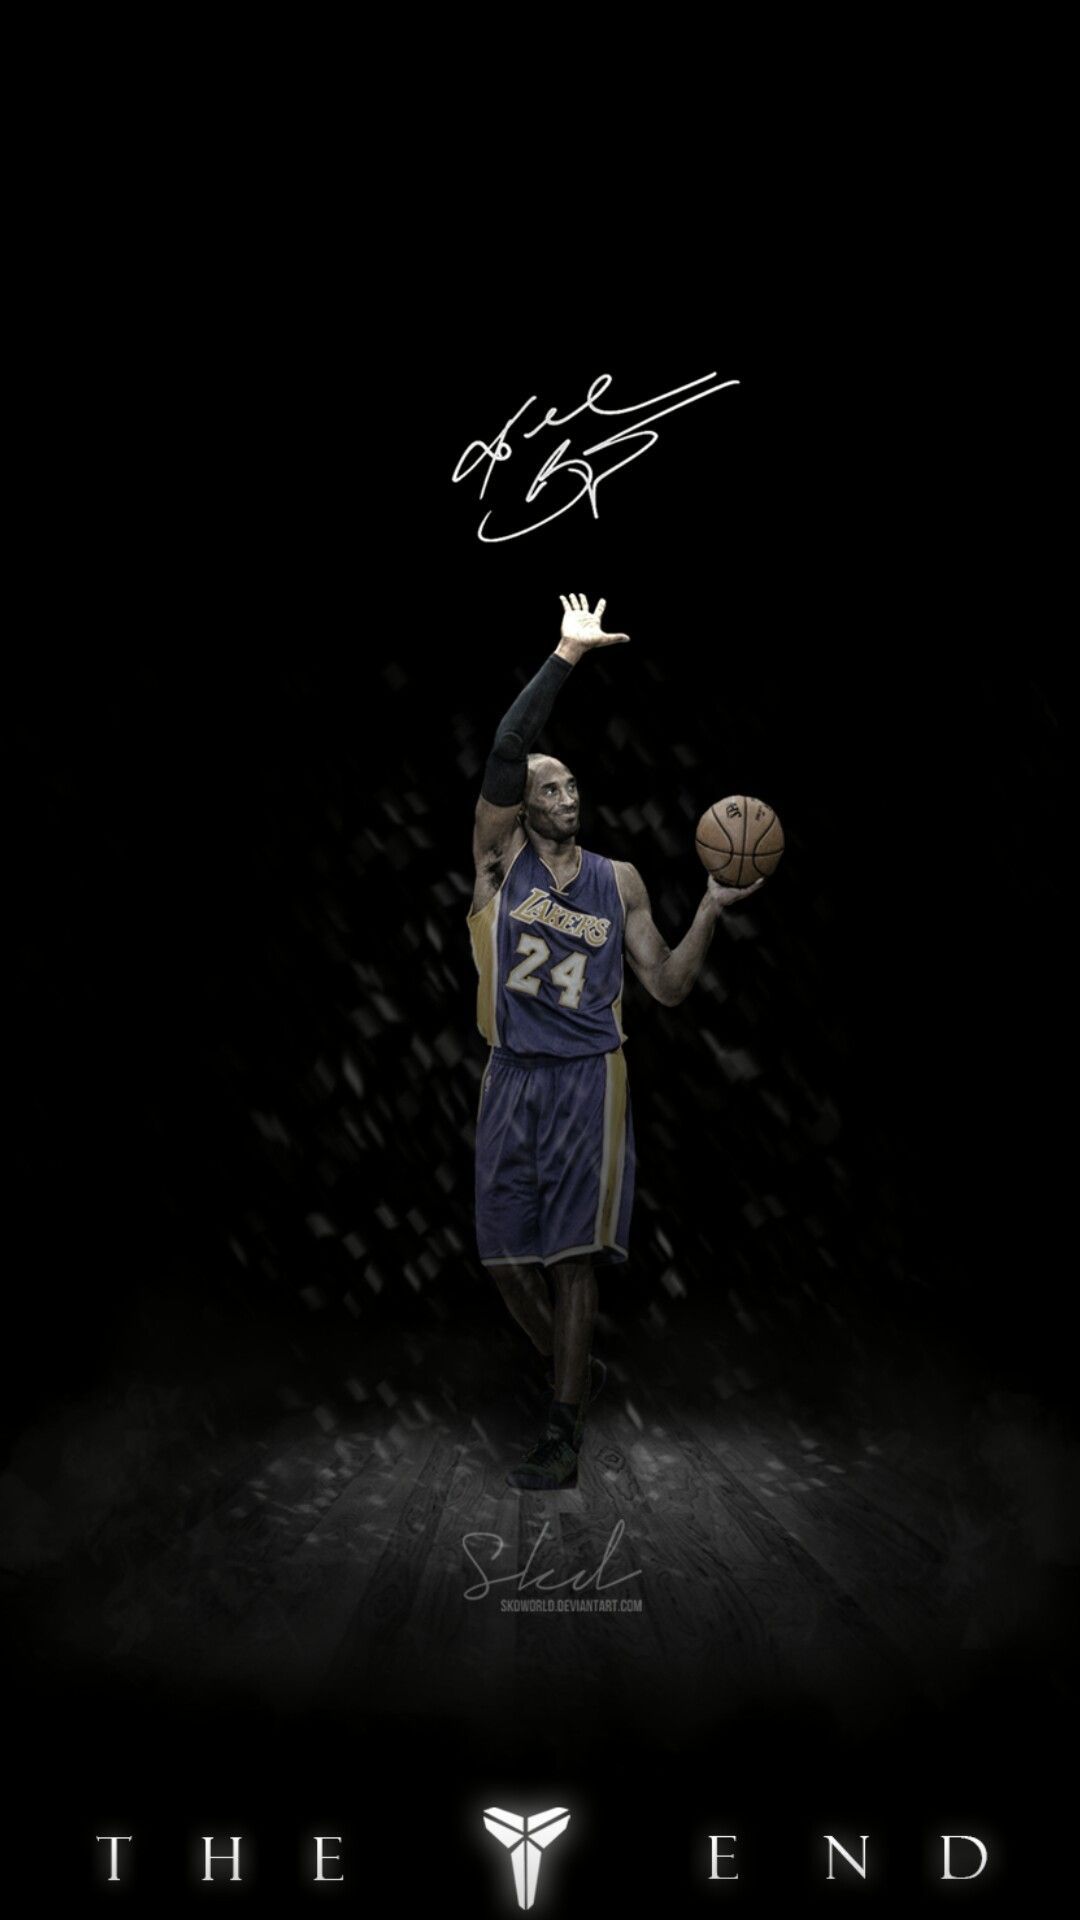 Download King Kobe Bryant Cartoon Wallpaper